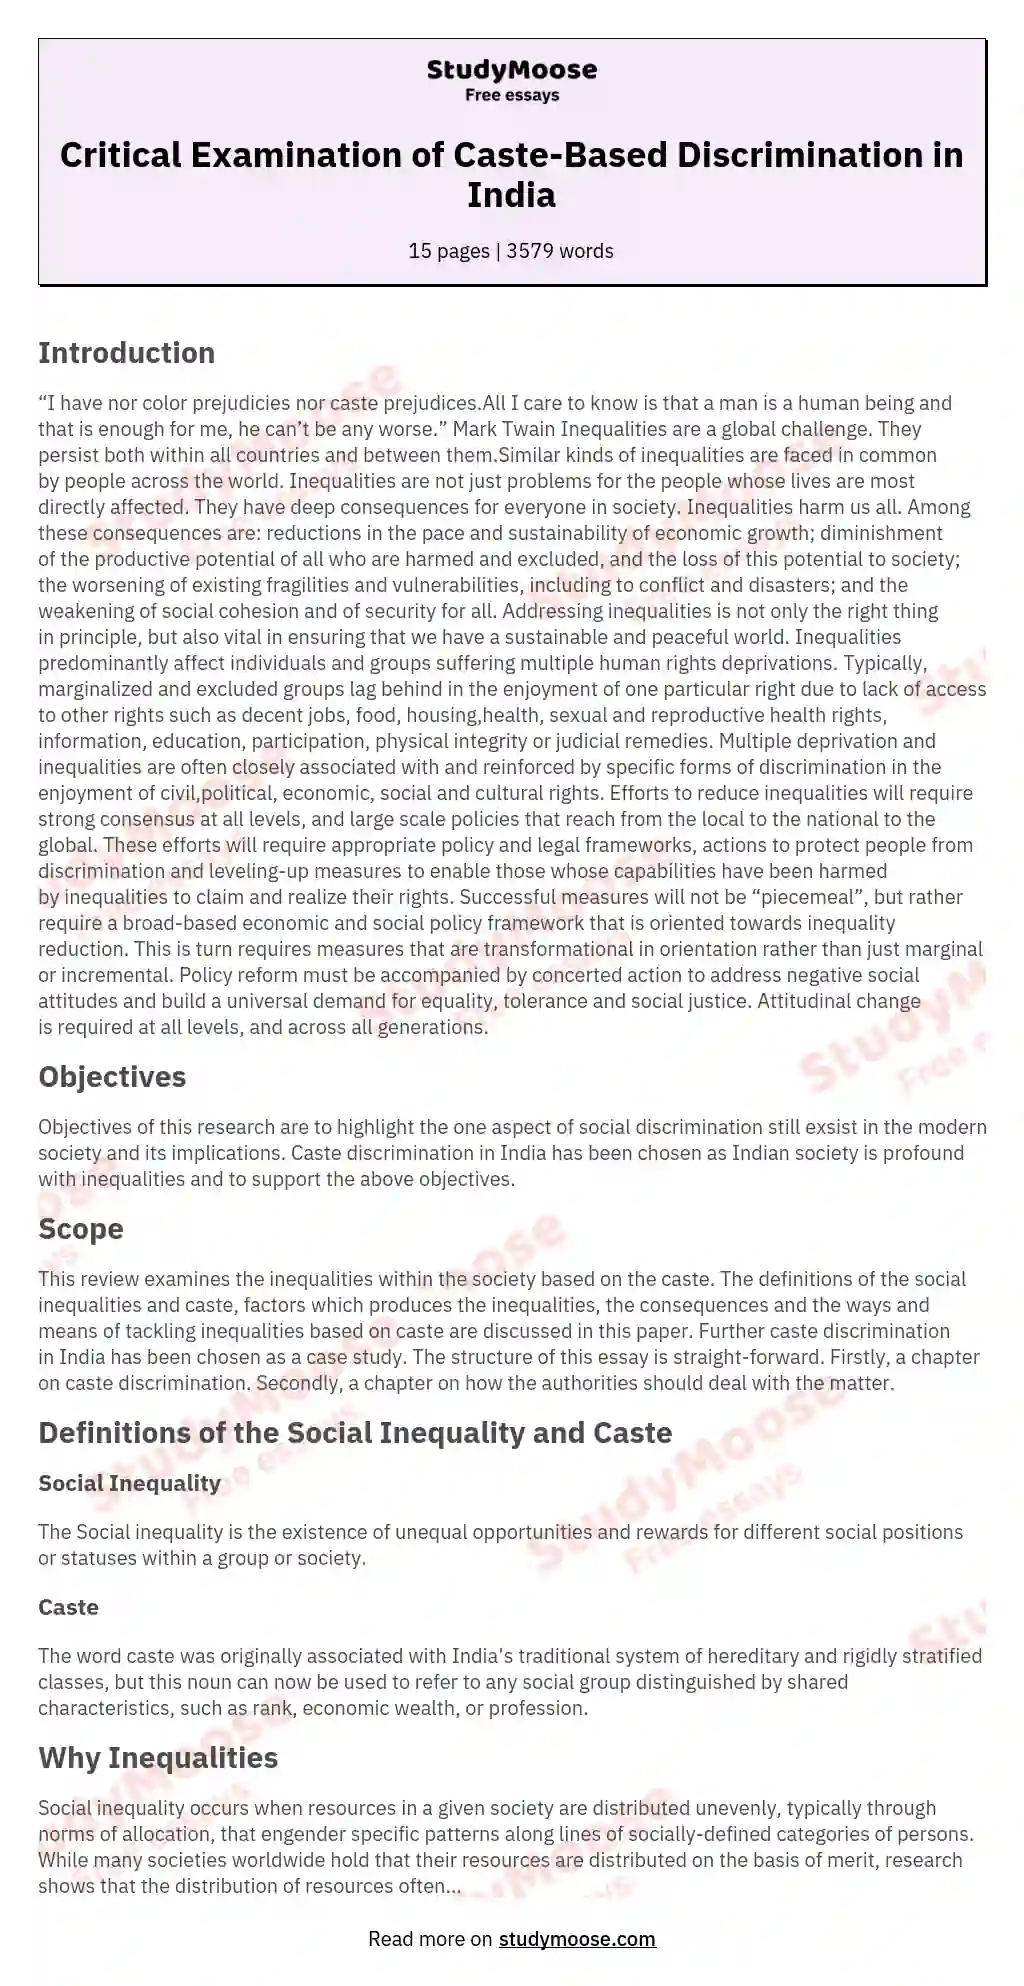 Critical Examination of Caste-Based Discrimination in India essay